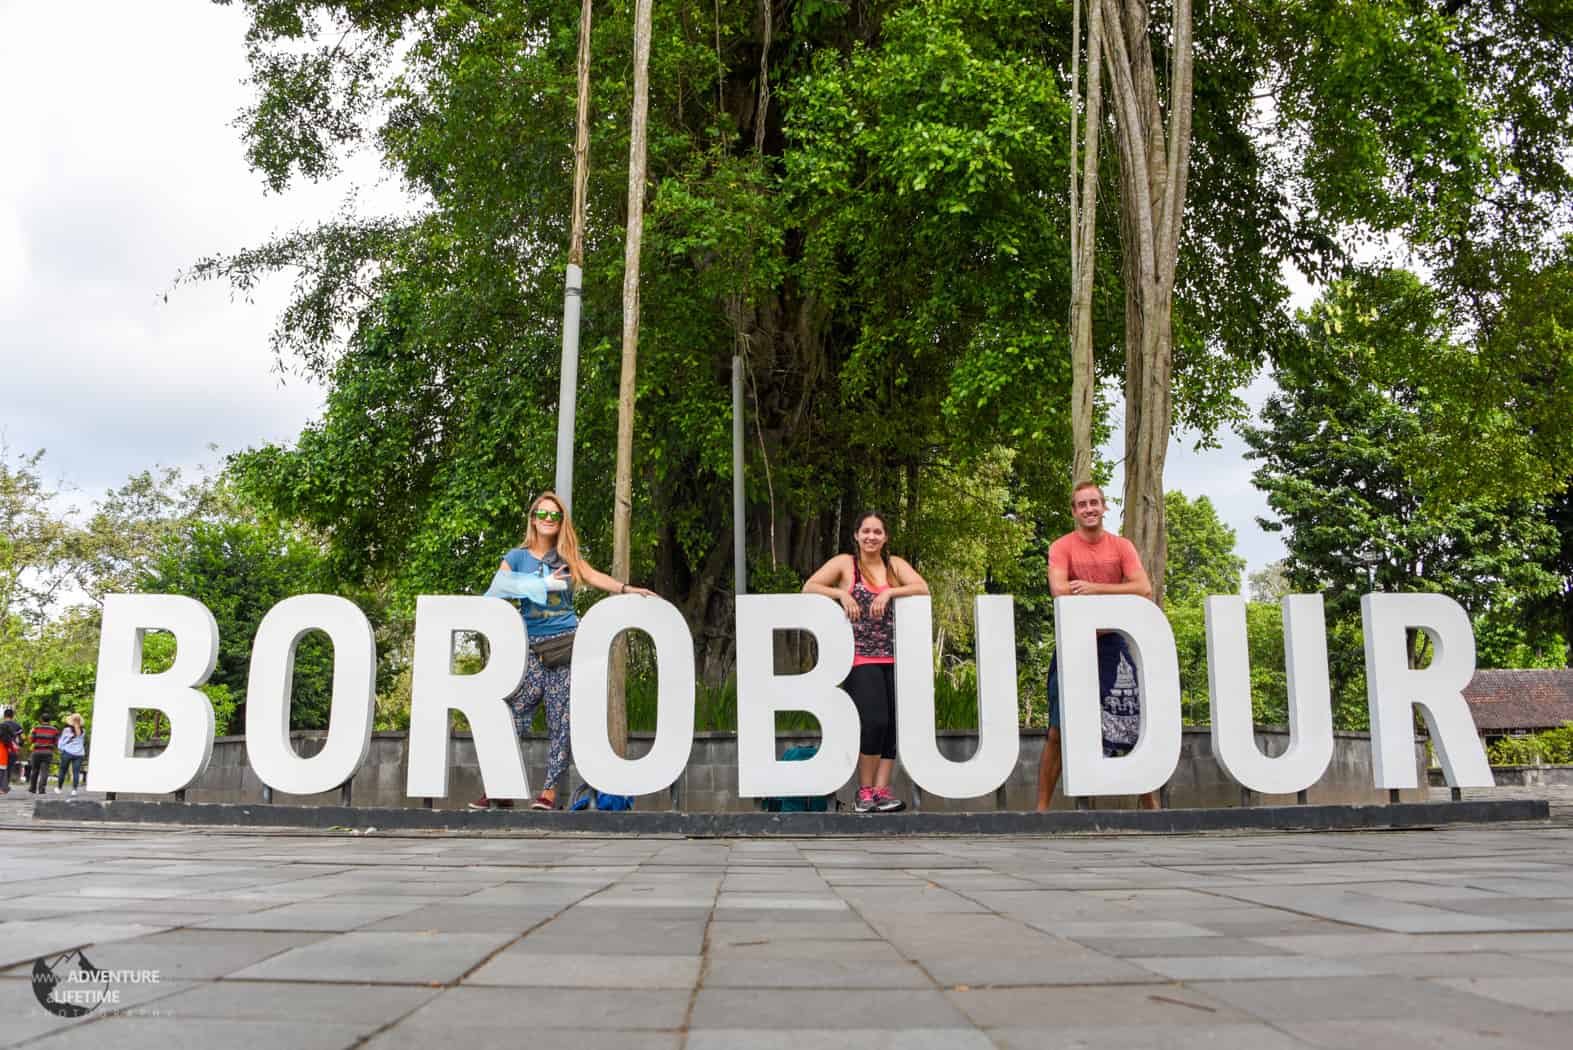 The entrance to Borobudur temple, Java